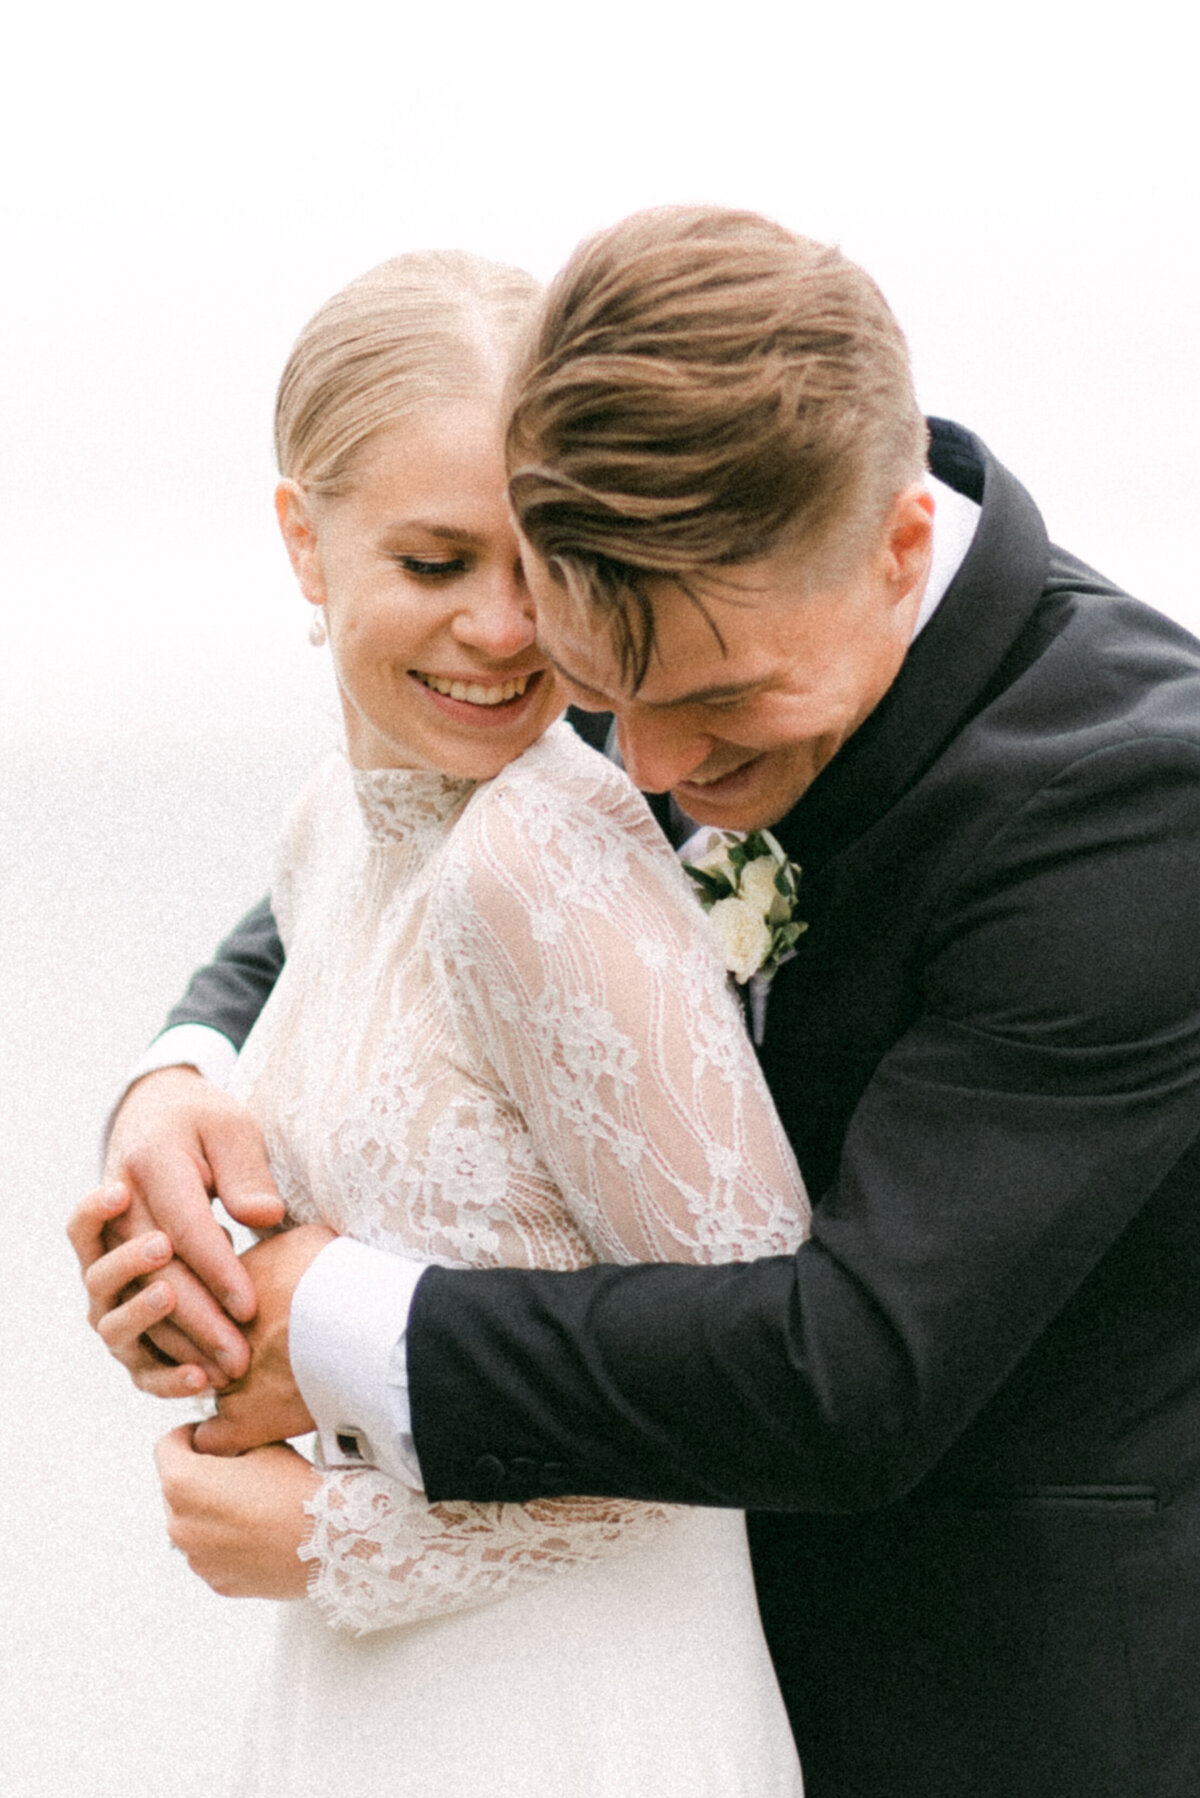 A wedding couple hugging in their wedding image by photographer Hannika Gabrielsso